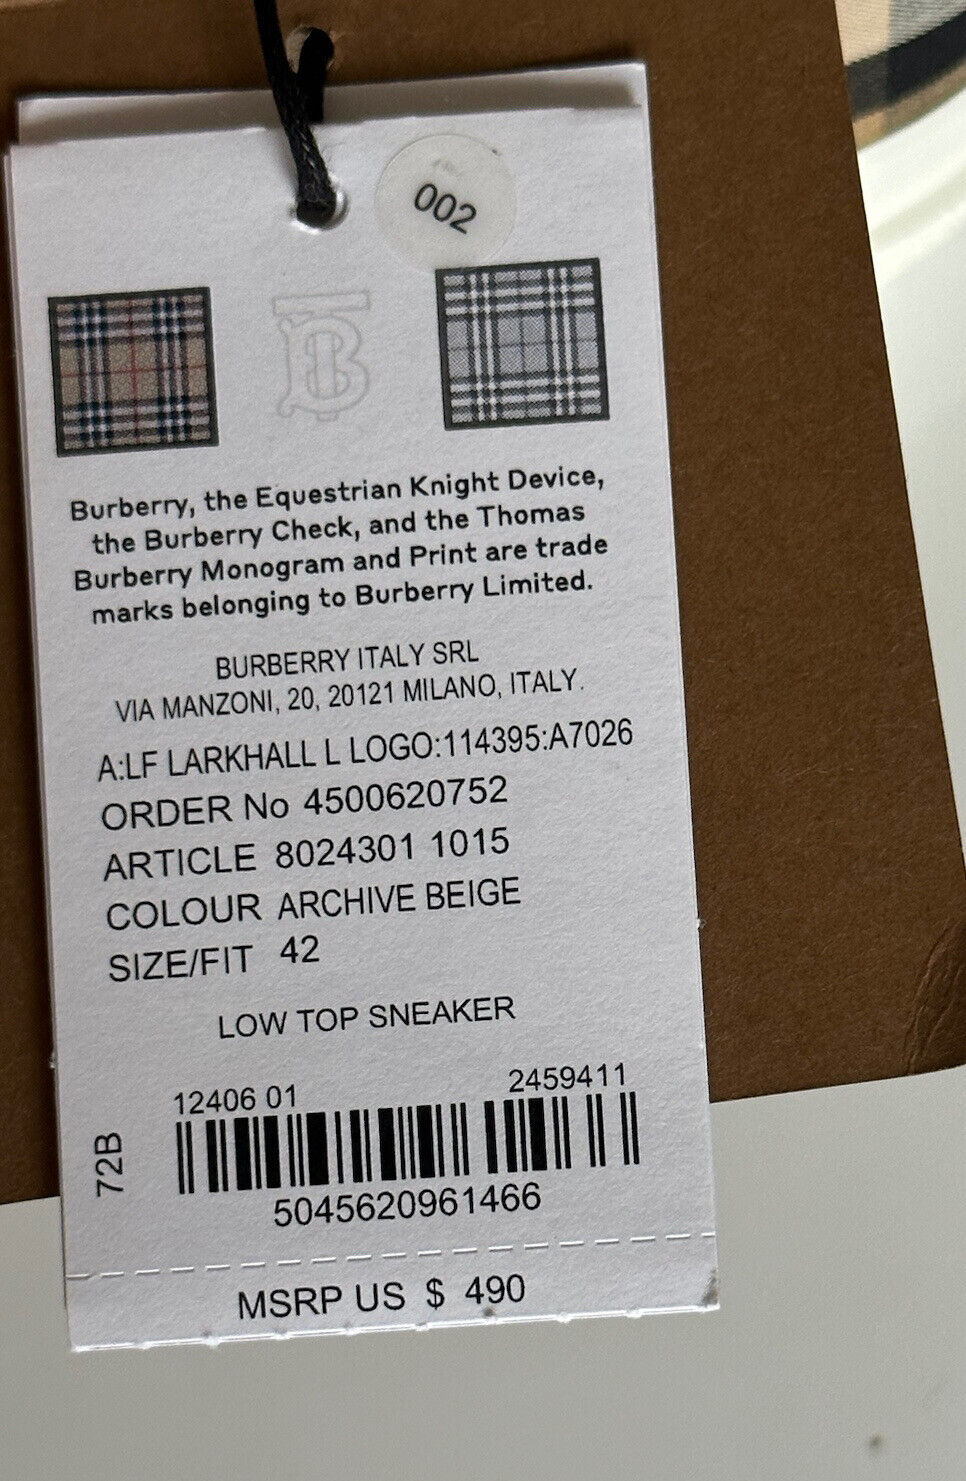 Burberry Larkhall Logo Women's Archive Beige Sneakers 12 US (42 Eu) 8024301 NIB